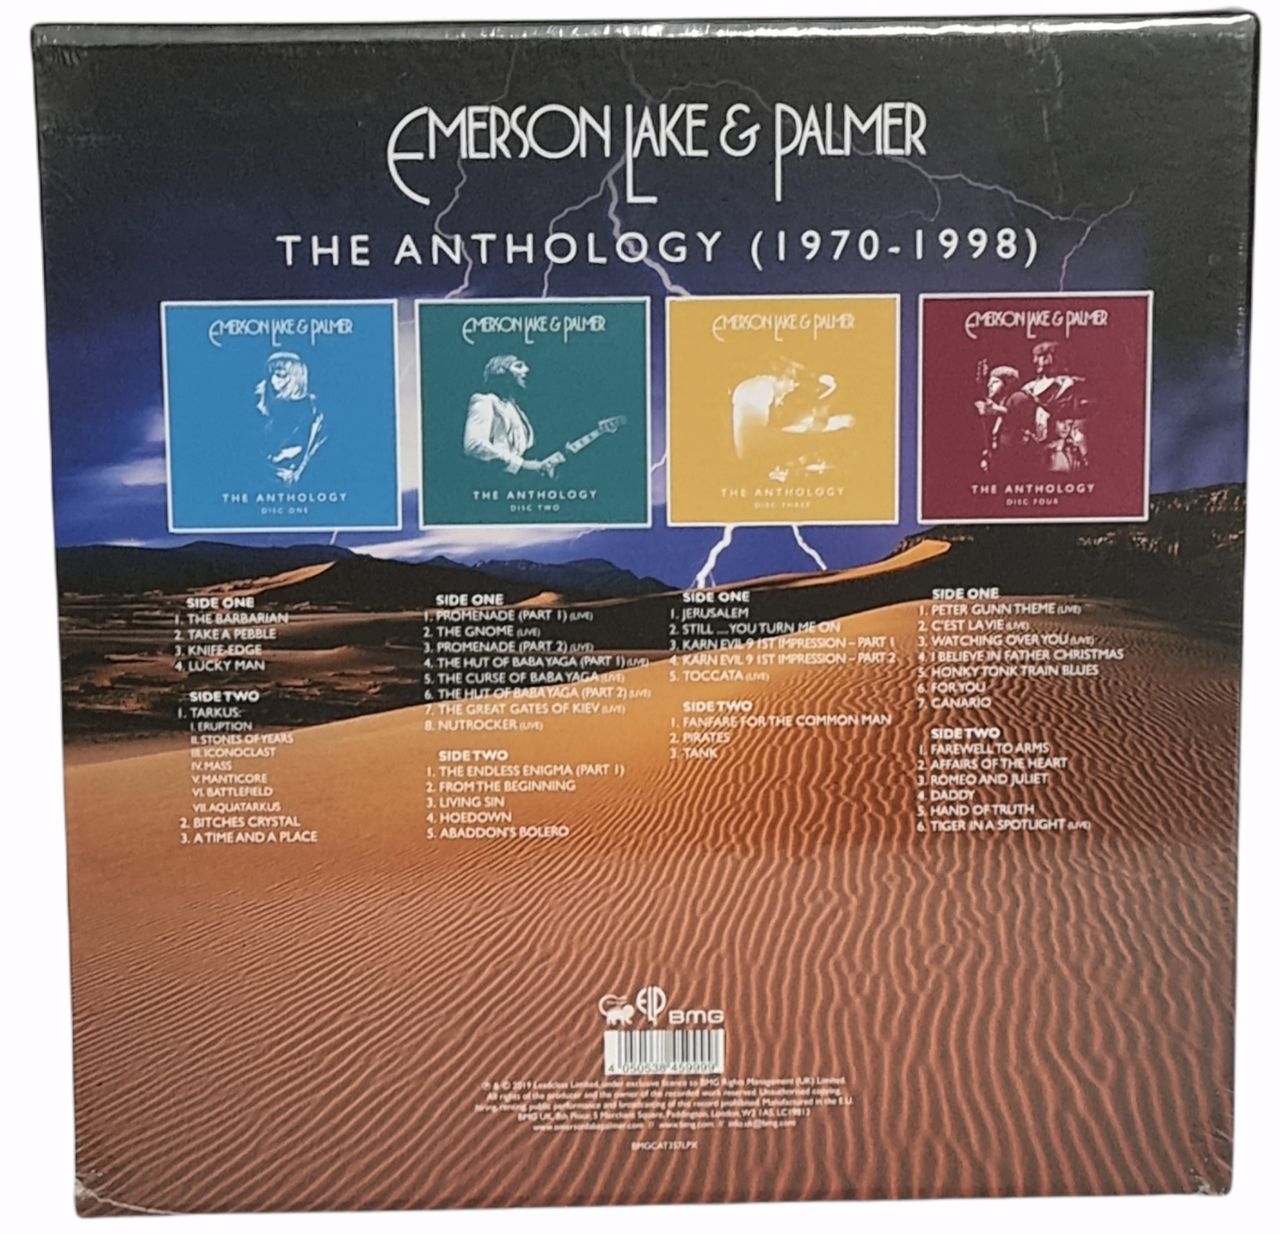 Emerson Lake & Palmer The Anthology (1970-1998) - Galaxy Effect Coloured Vinyl - Sealed Box	 UK Vinyl Box Set 4050538459999